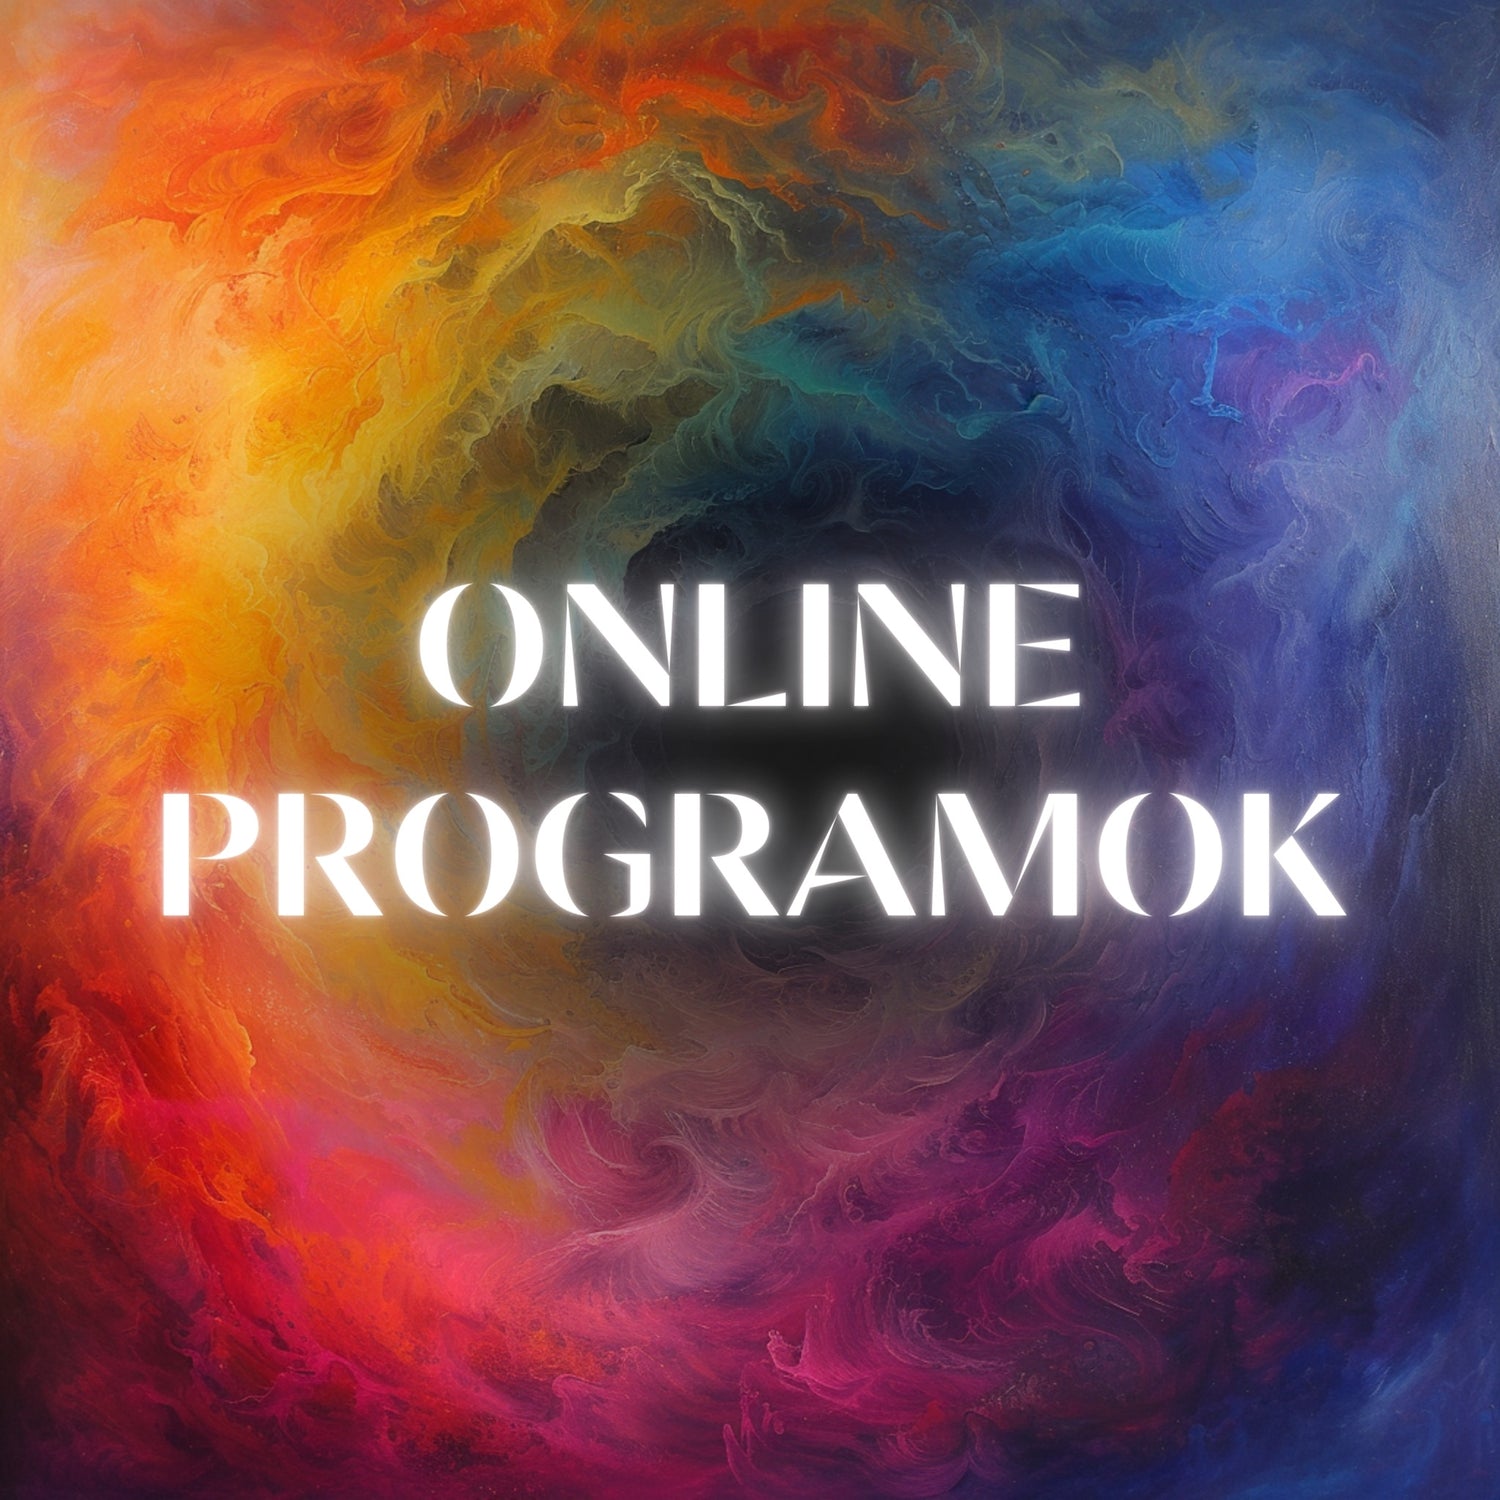 Online programok